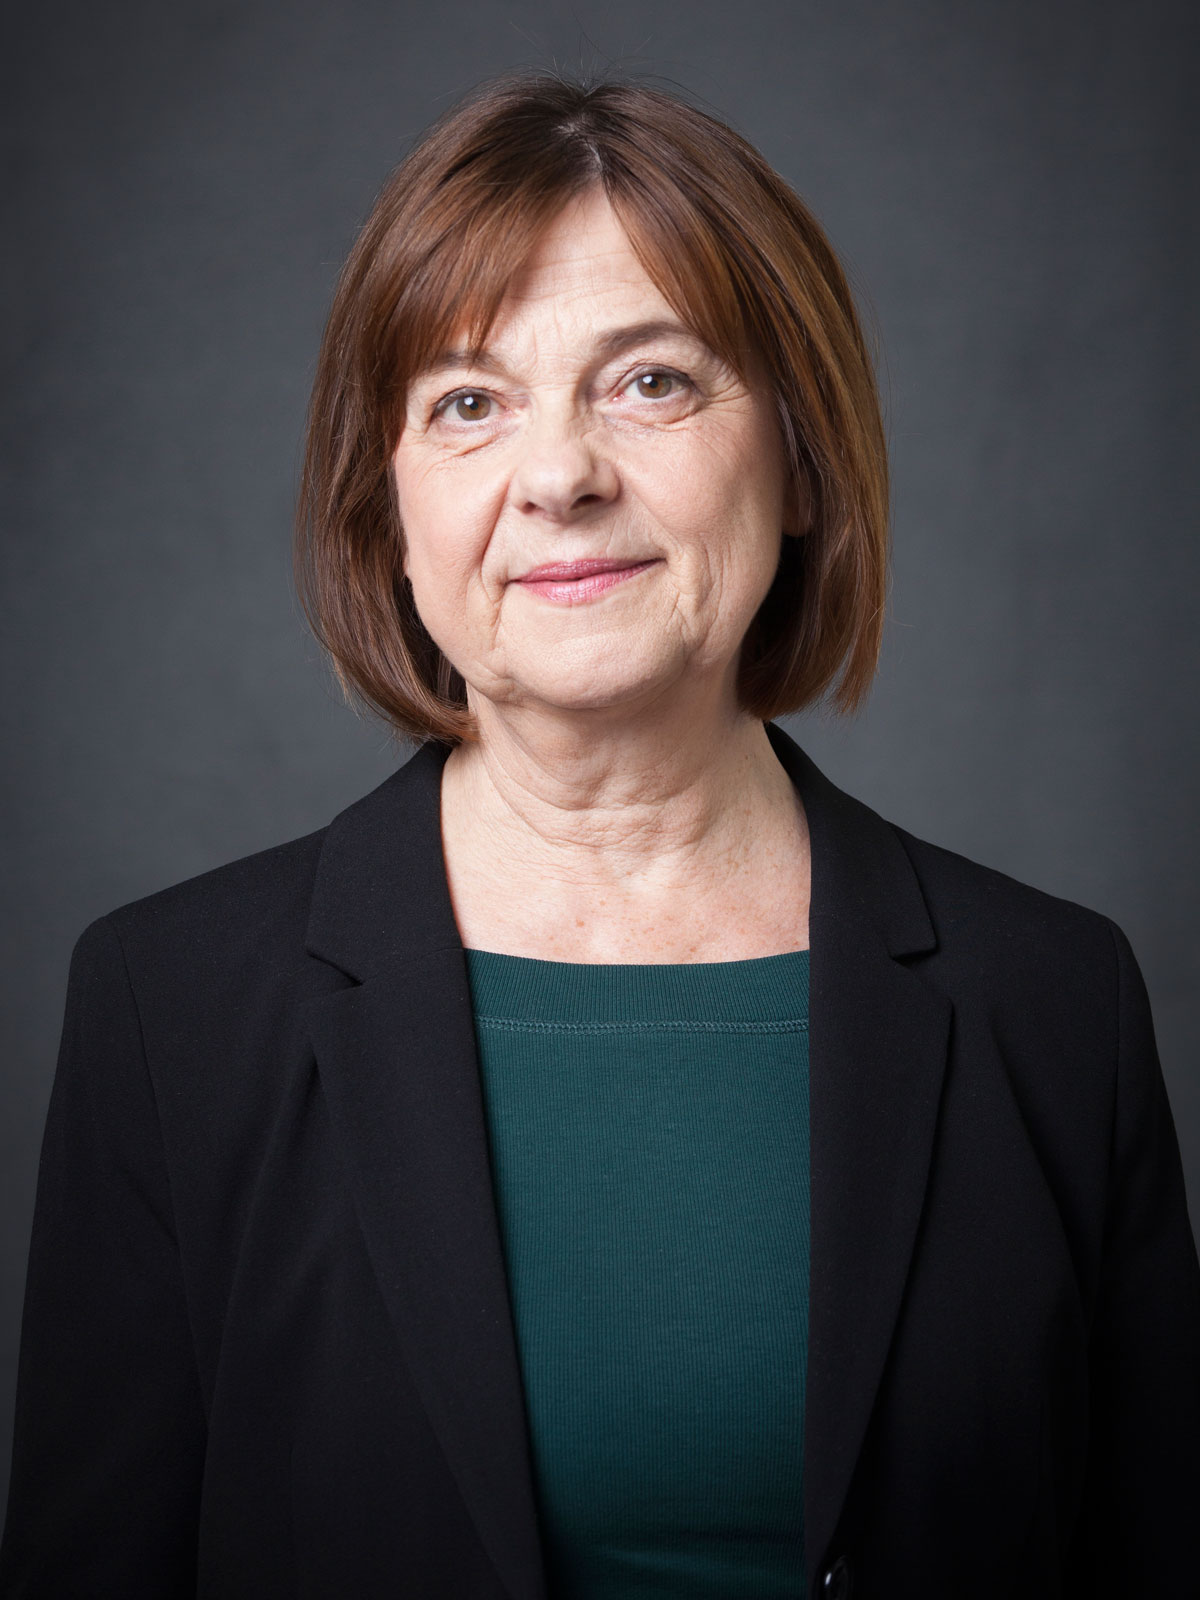 Ministerin Ursula Nonnemacher, autogrammfoto